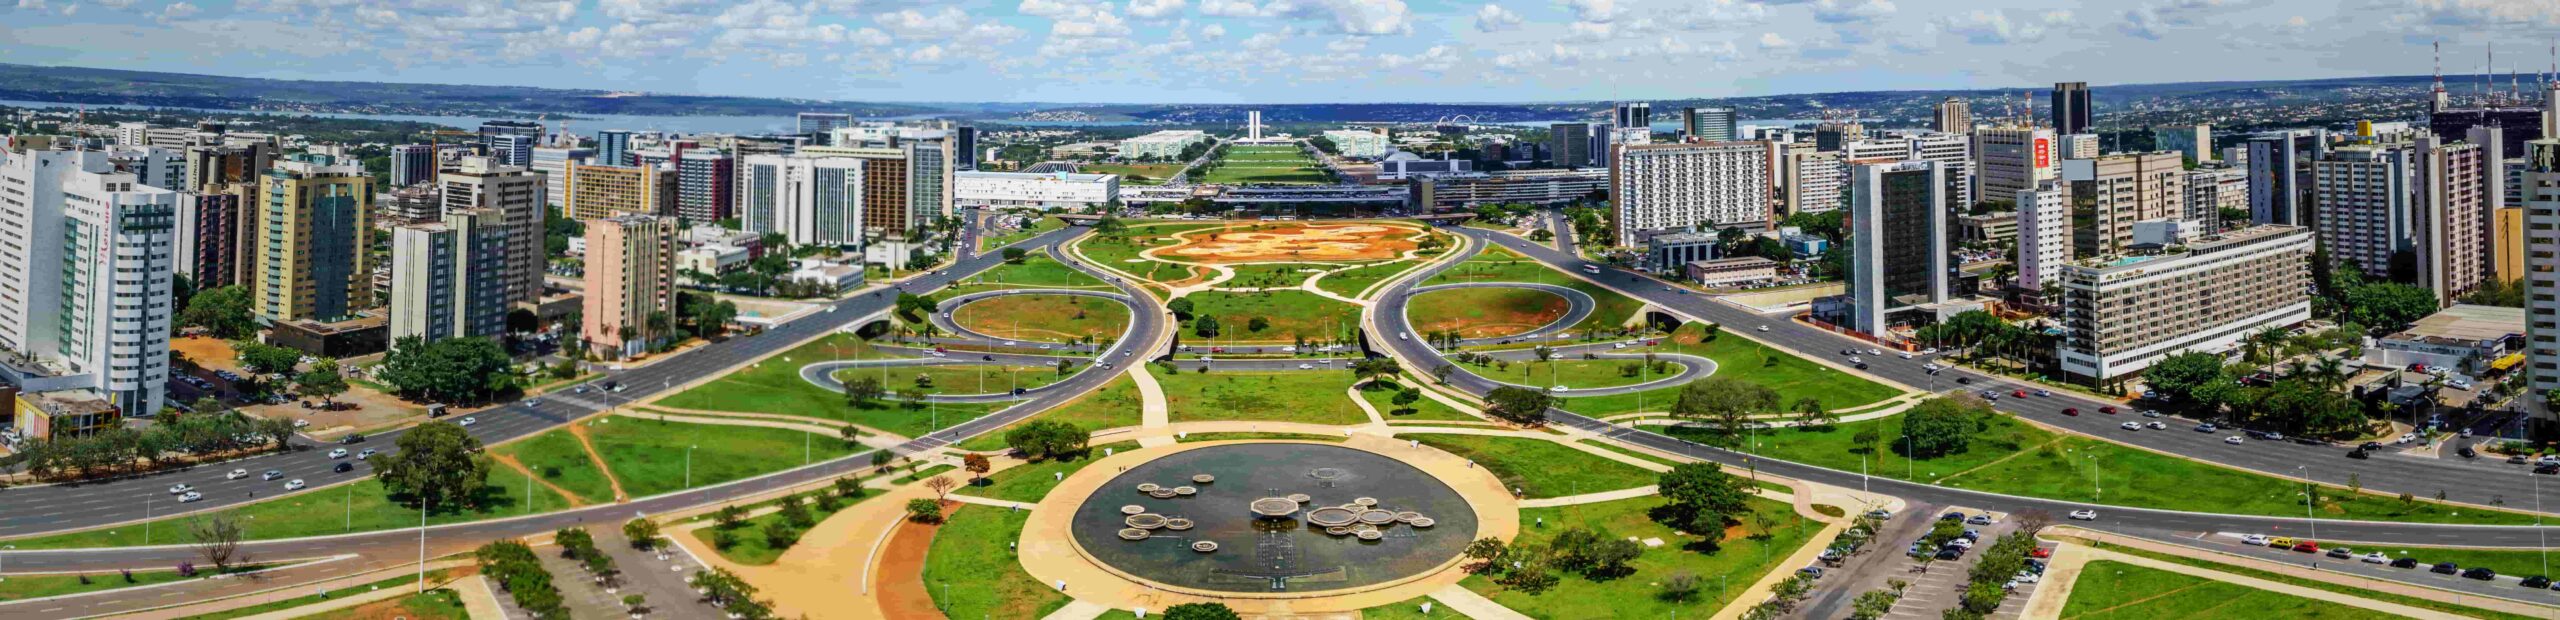 Brazil's center of power, Brasilia capital. (Photo internet reproduction)